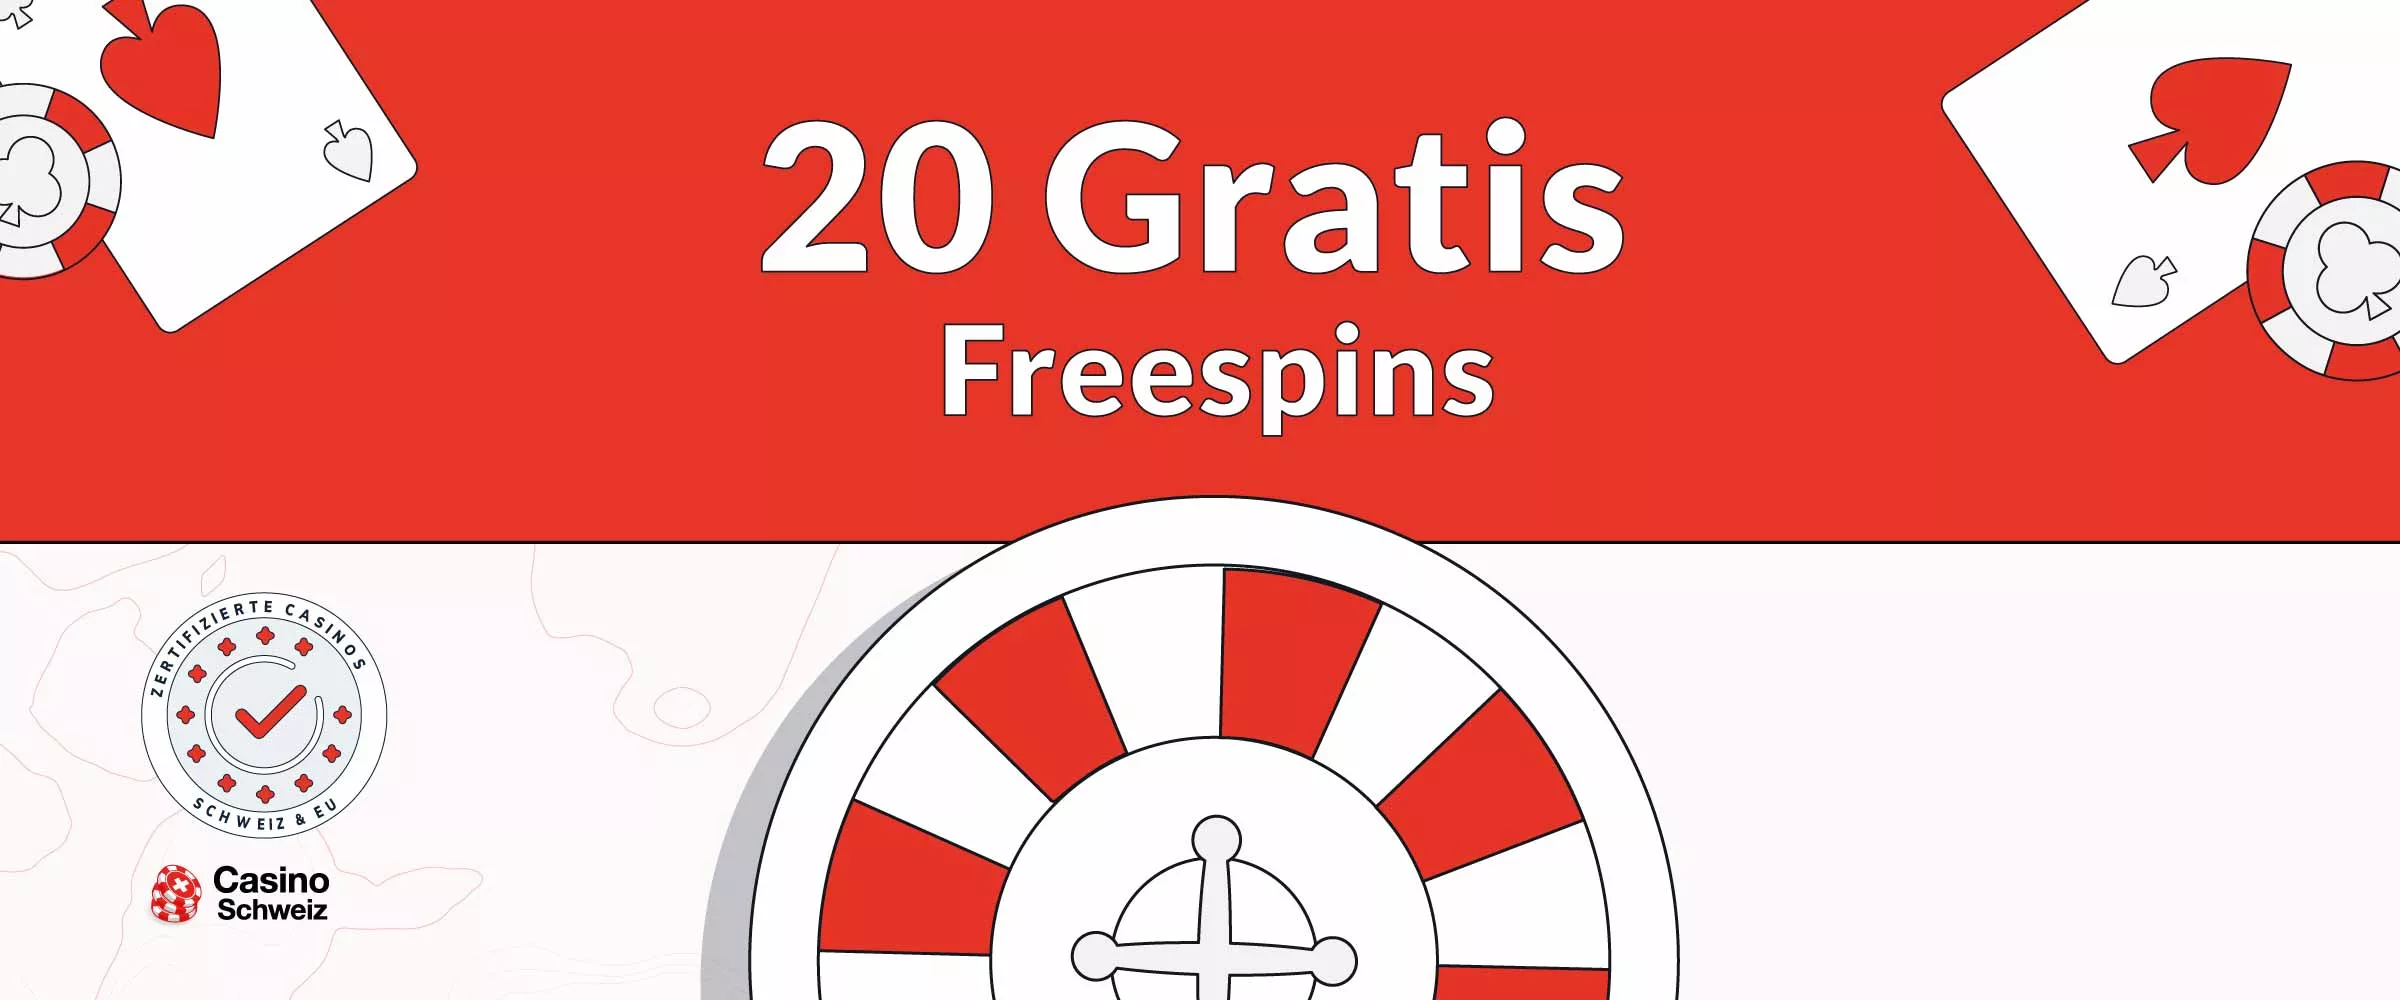 20 gratis spins no deposit free spins